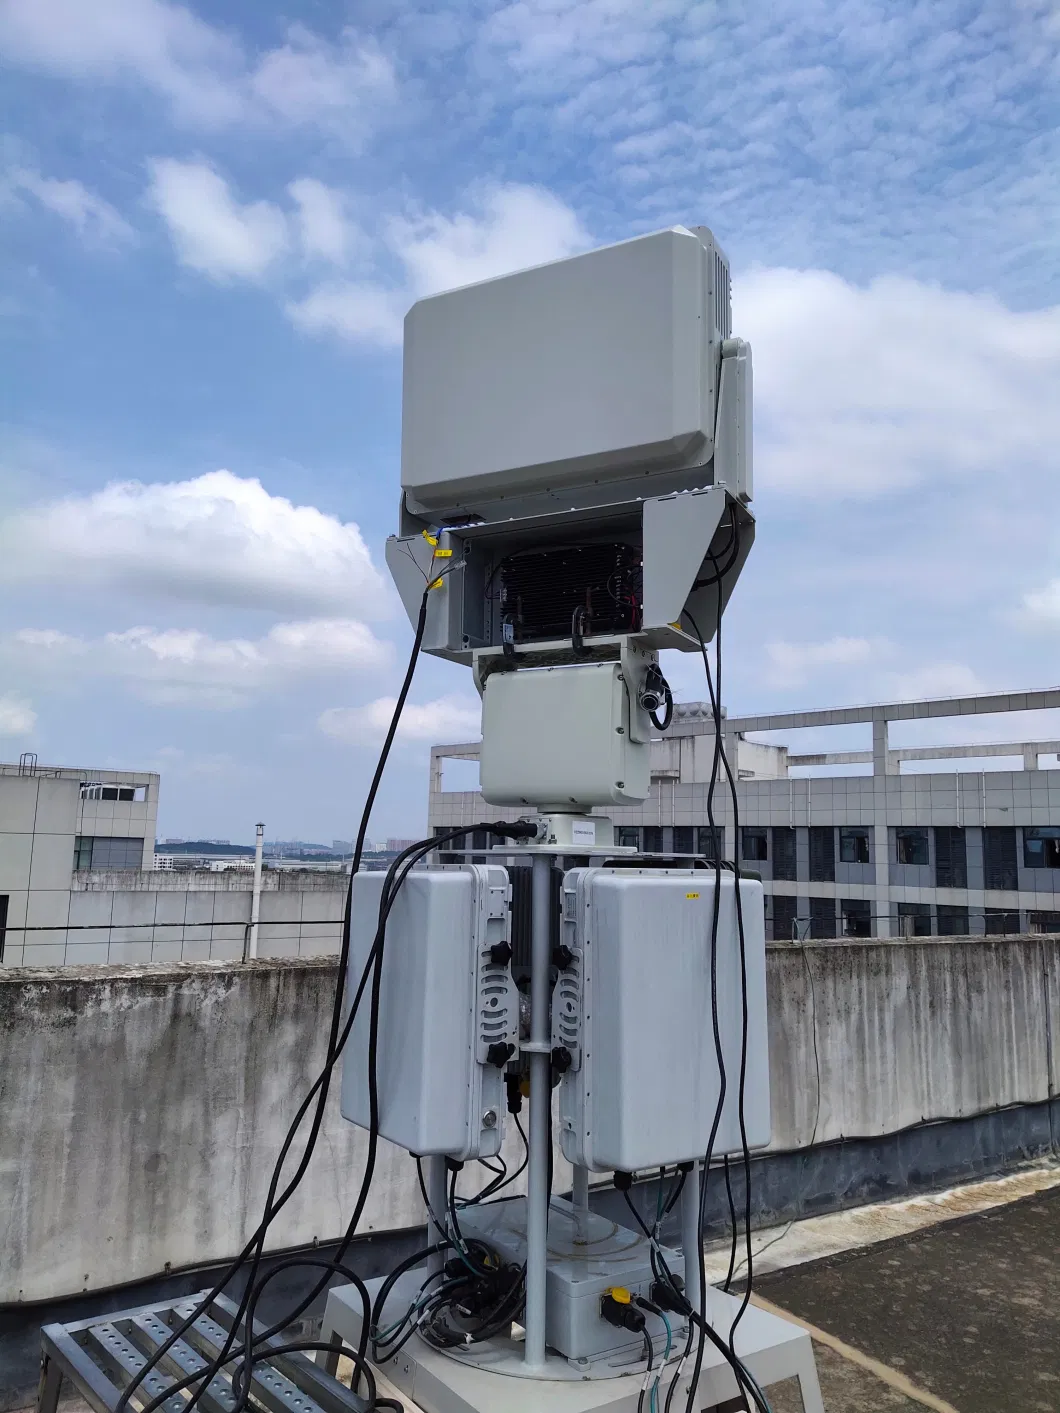 S Band Surveillance Radar, Radar Surveillance Better Than Surveillance Camera